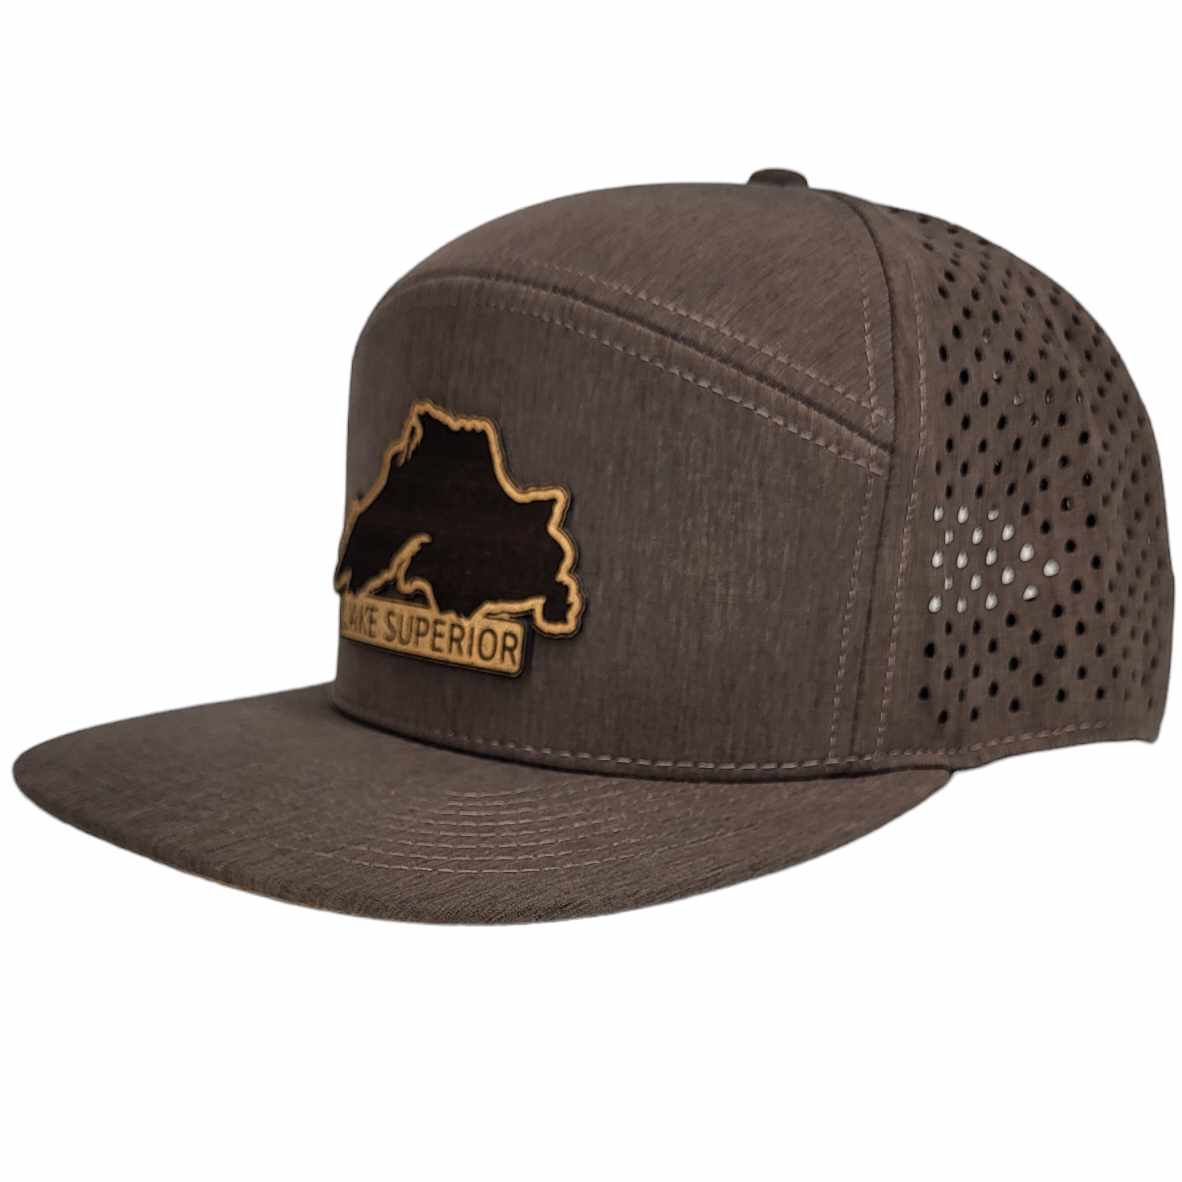 Lake Superior Hat